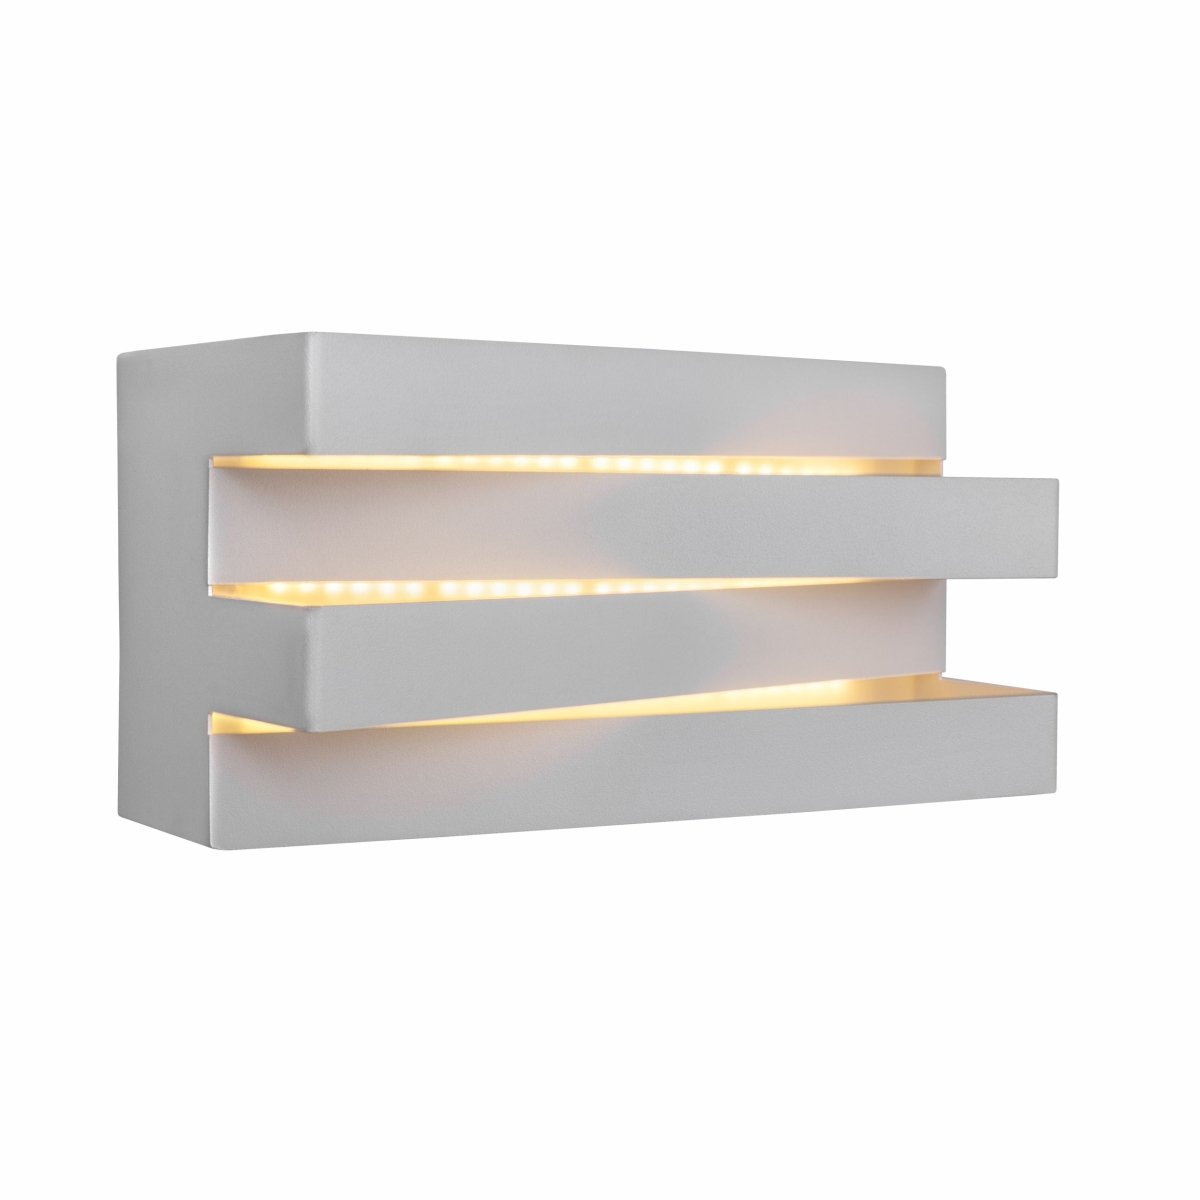 Main image of LED White Metal Wall Light 12W Warm White 3000K | TEKLED 151-19536